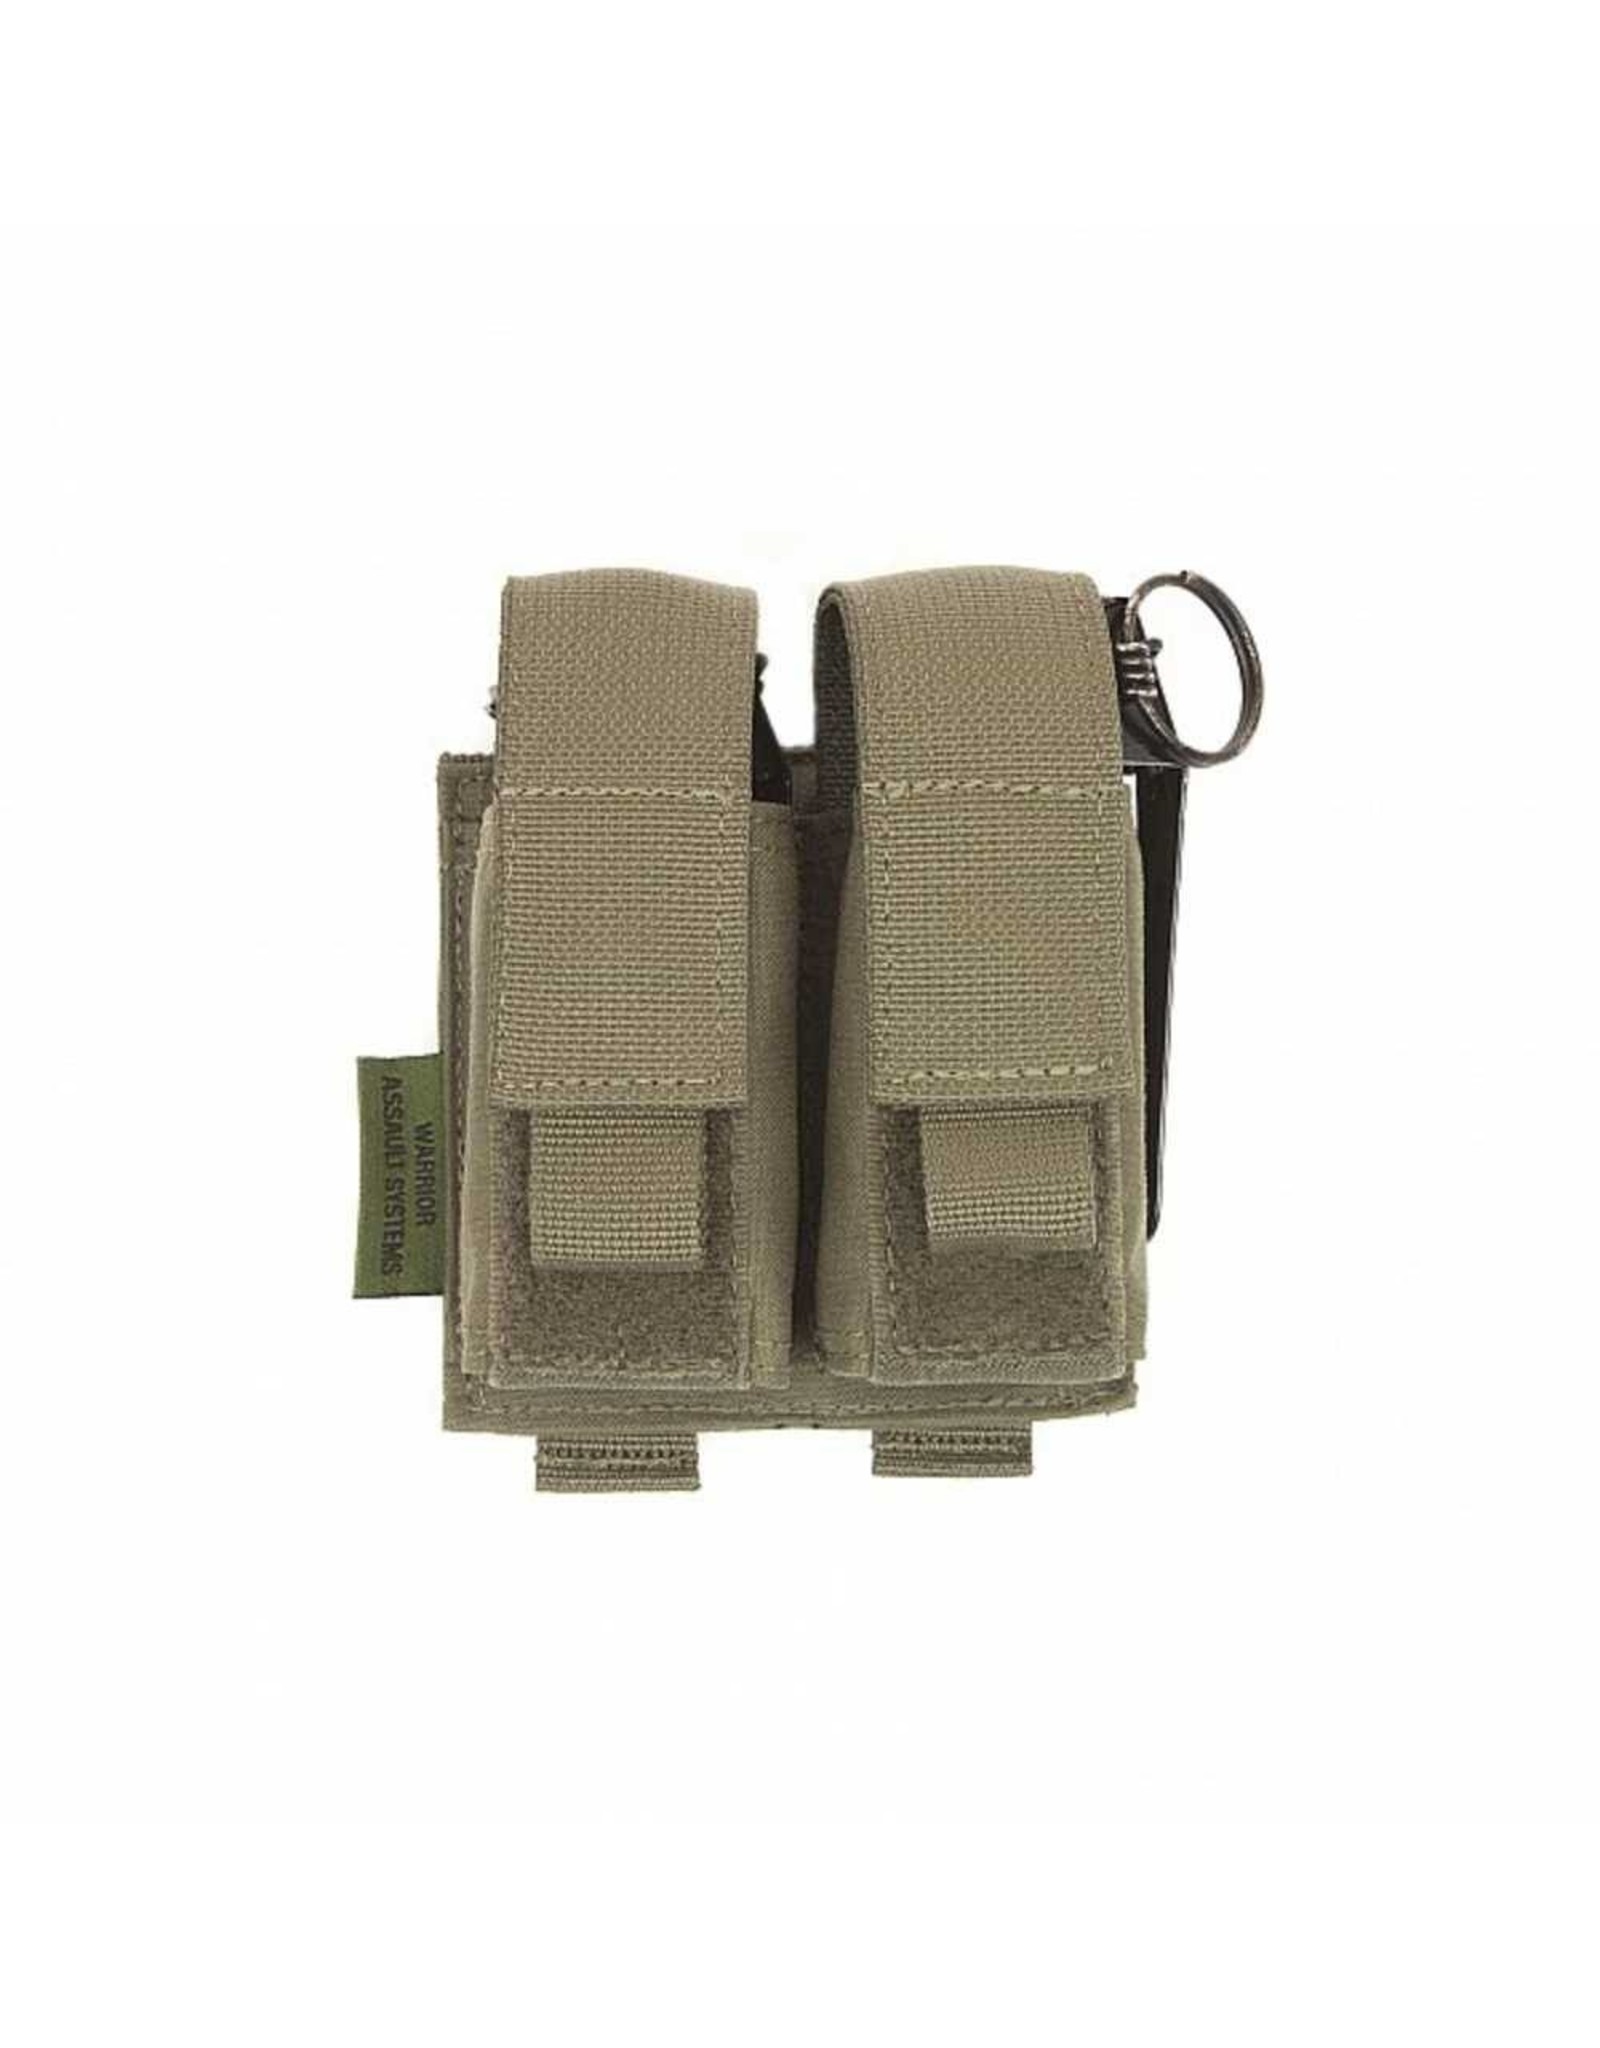 Warrior Double 40mm Grenade/ Flashbang Pouch - Ranger Green